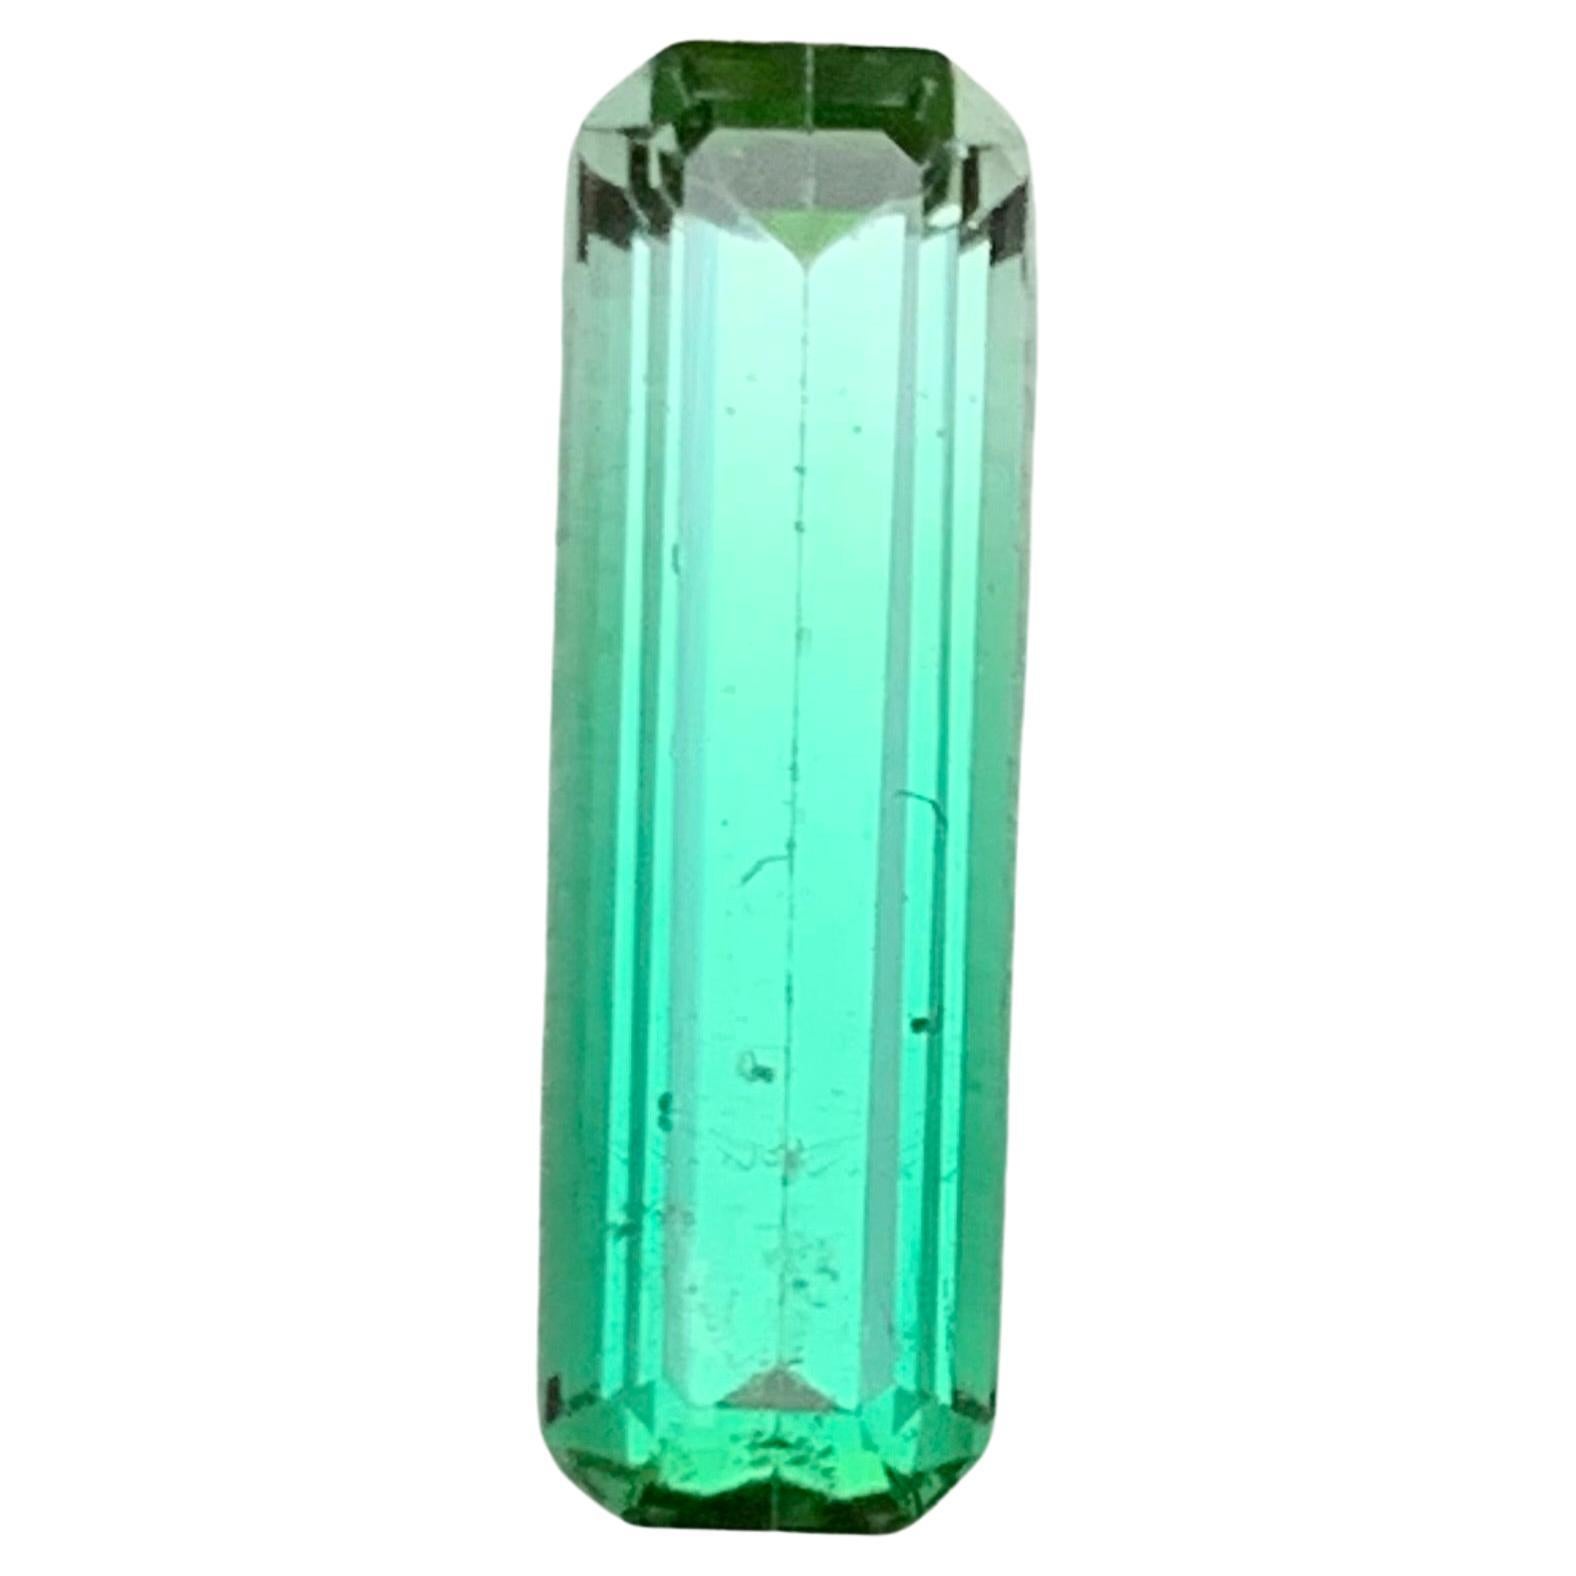 Rare Vivid Bluish Green Bicolor Tourmaline Gemstone 2.85 Ct Emerald Cut for Ring